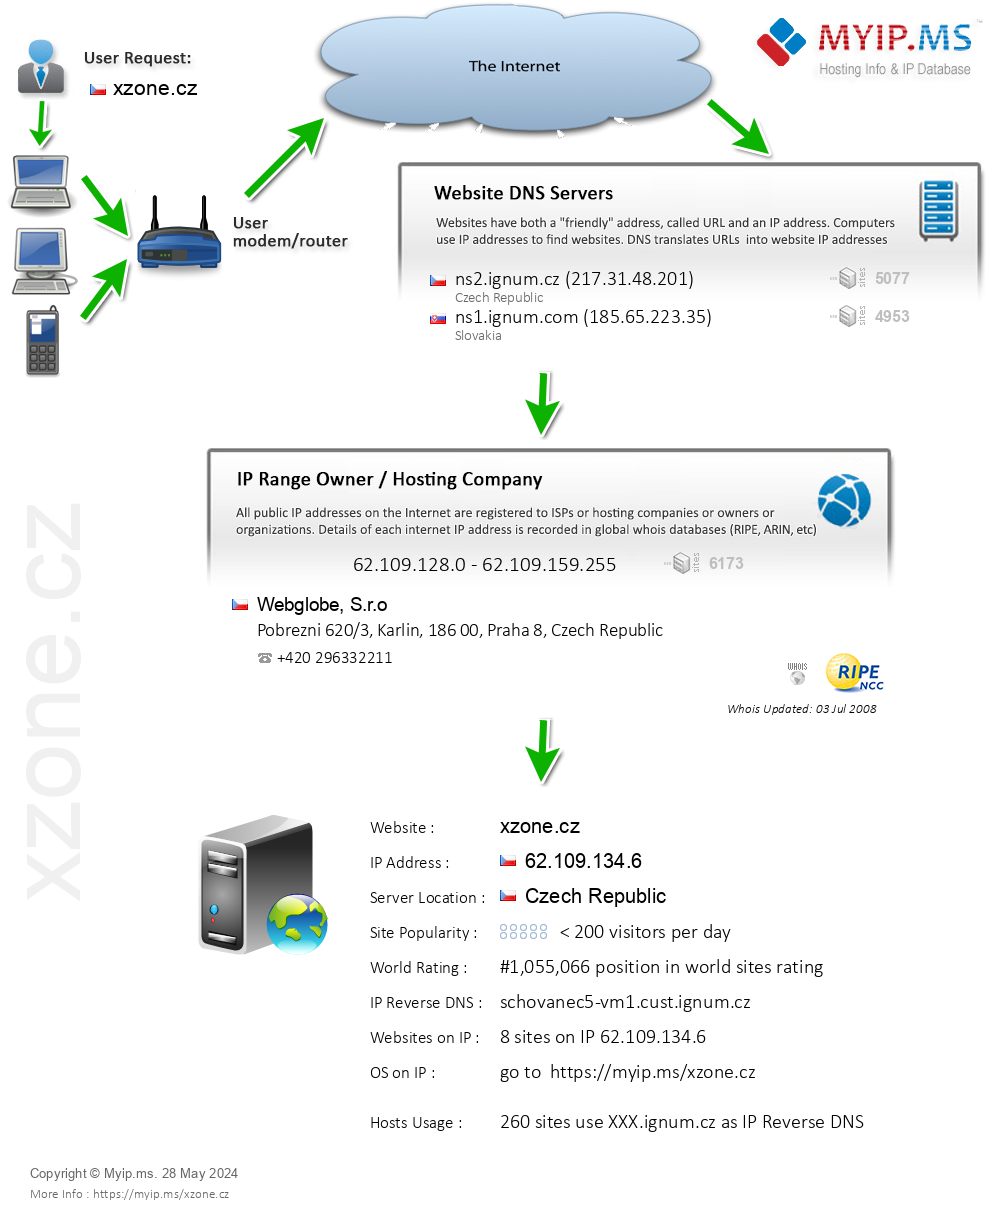 Xzone.cz - Website Hosting Visual IP Diagram